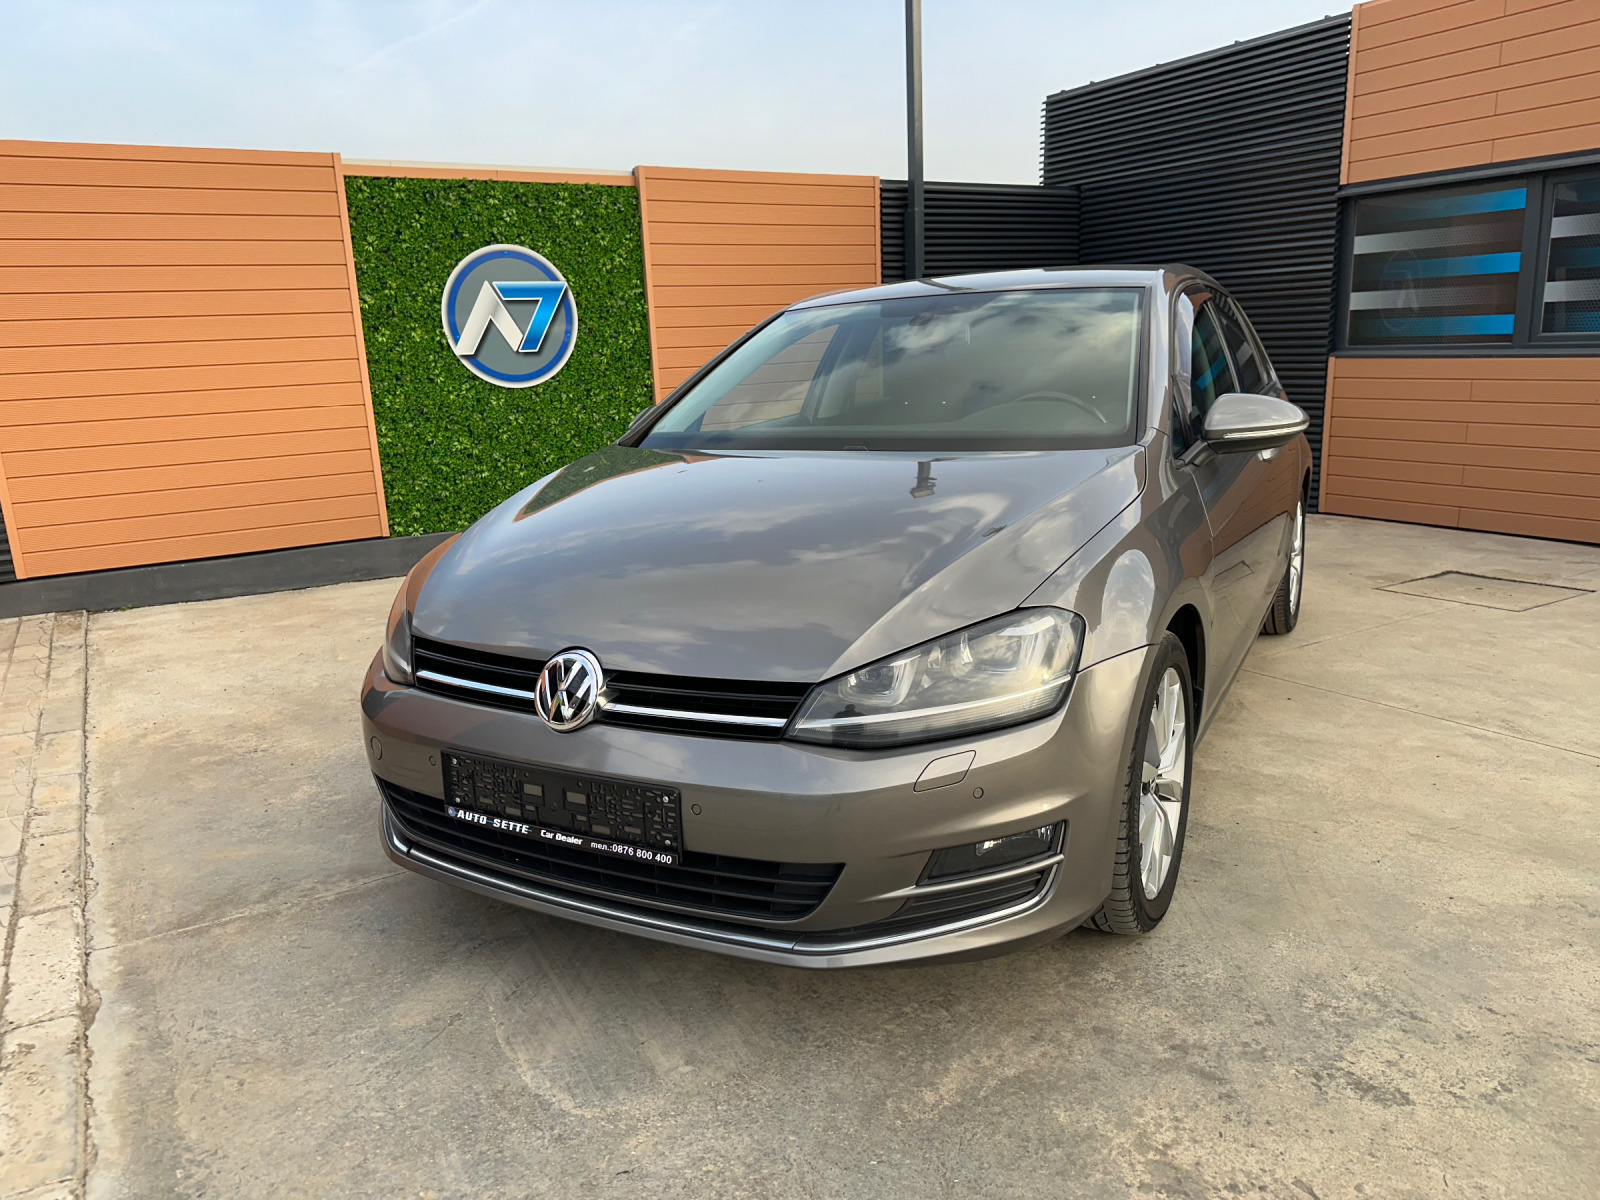 VW Golf 2.0TDI/4-motio/keyless/xenon - изображение 1